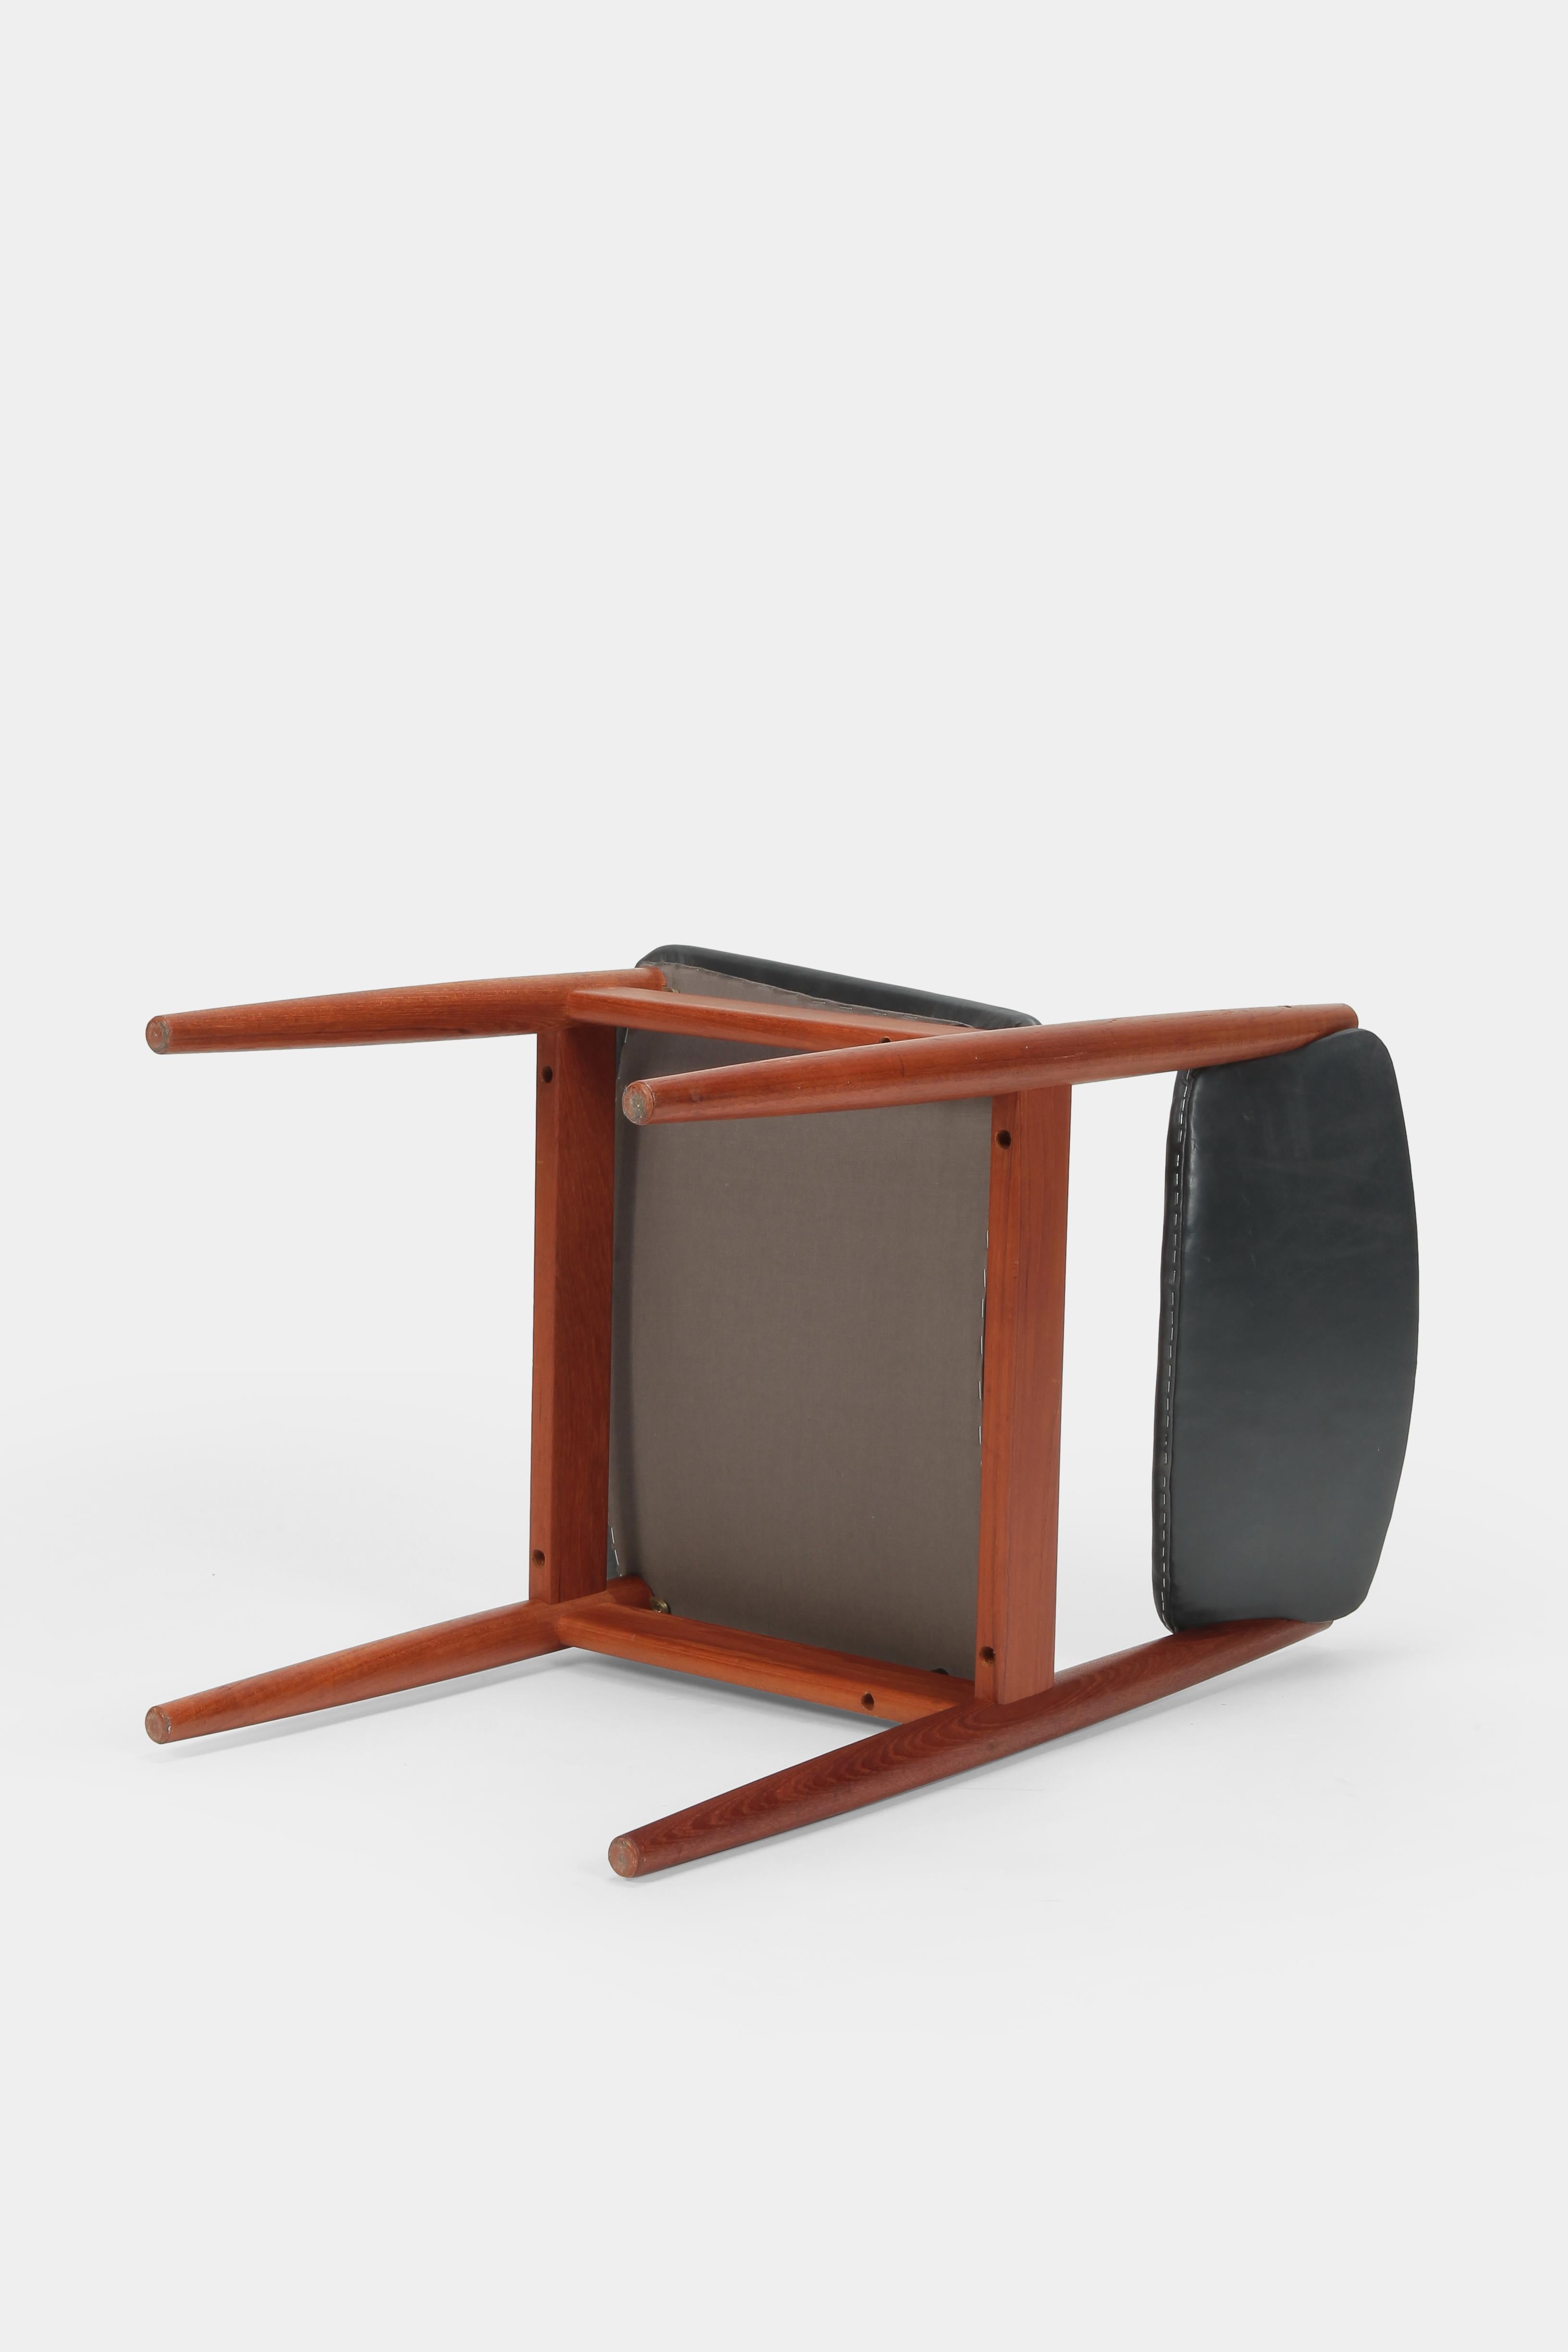 Pair Finn Juhl Model 197 Chairs Leather Teak, 1960s For Sale 5